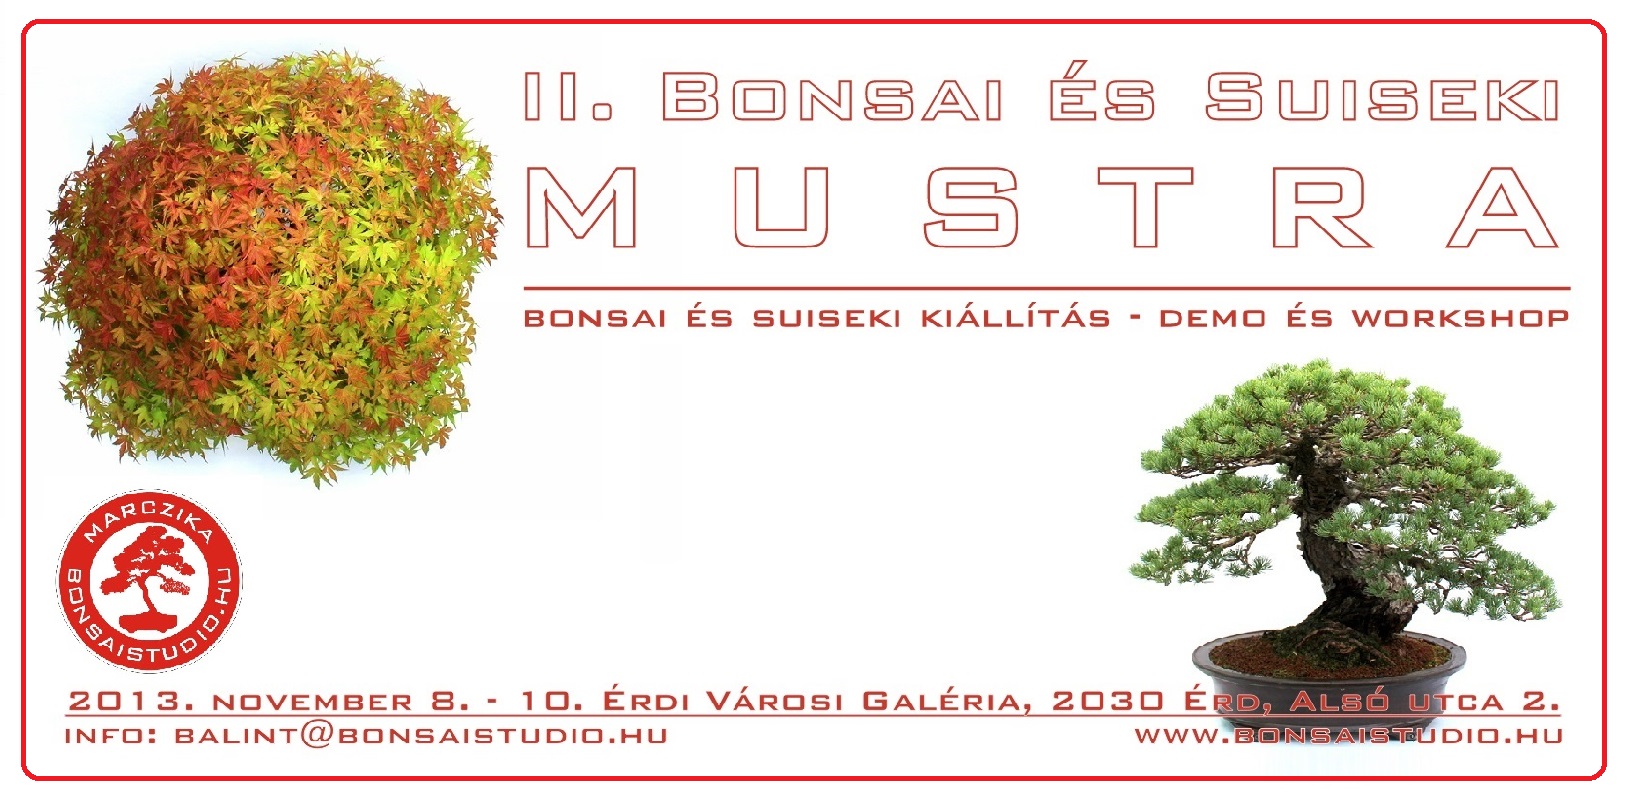 bonsai es suiseki kiallitas exhibition bonsai vasarlas erd hungary